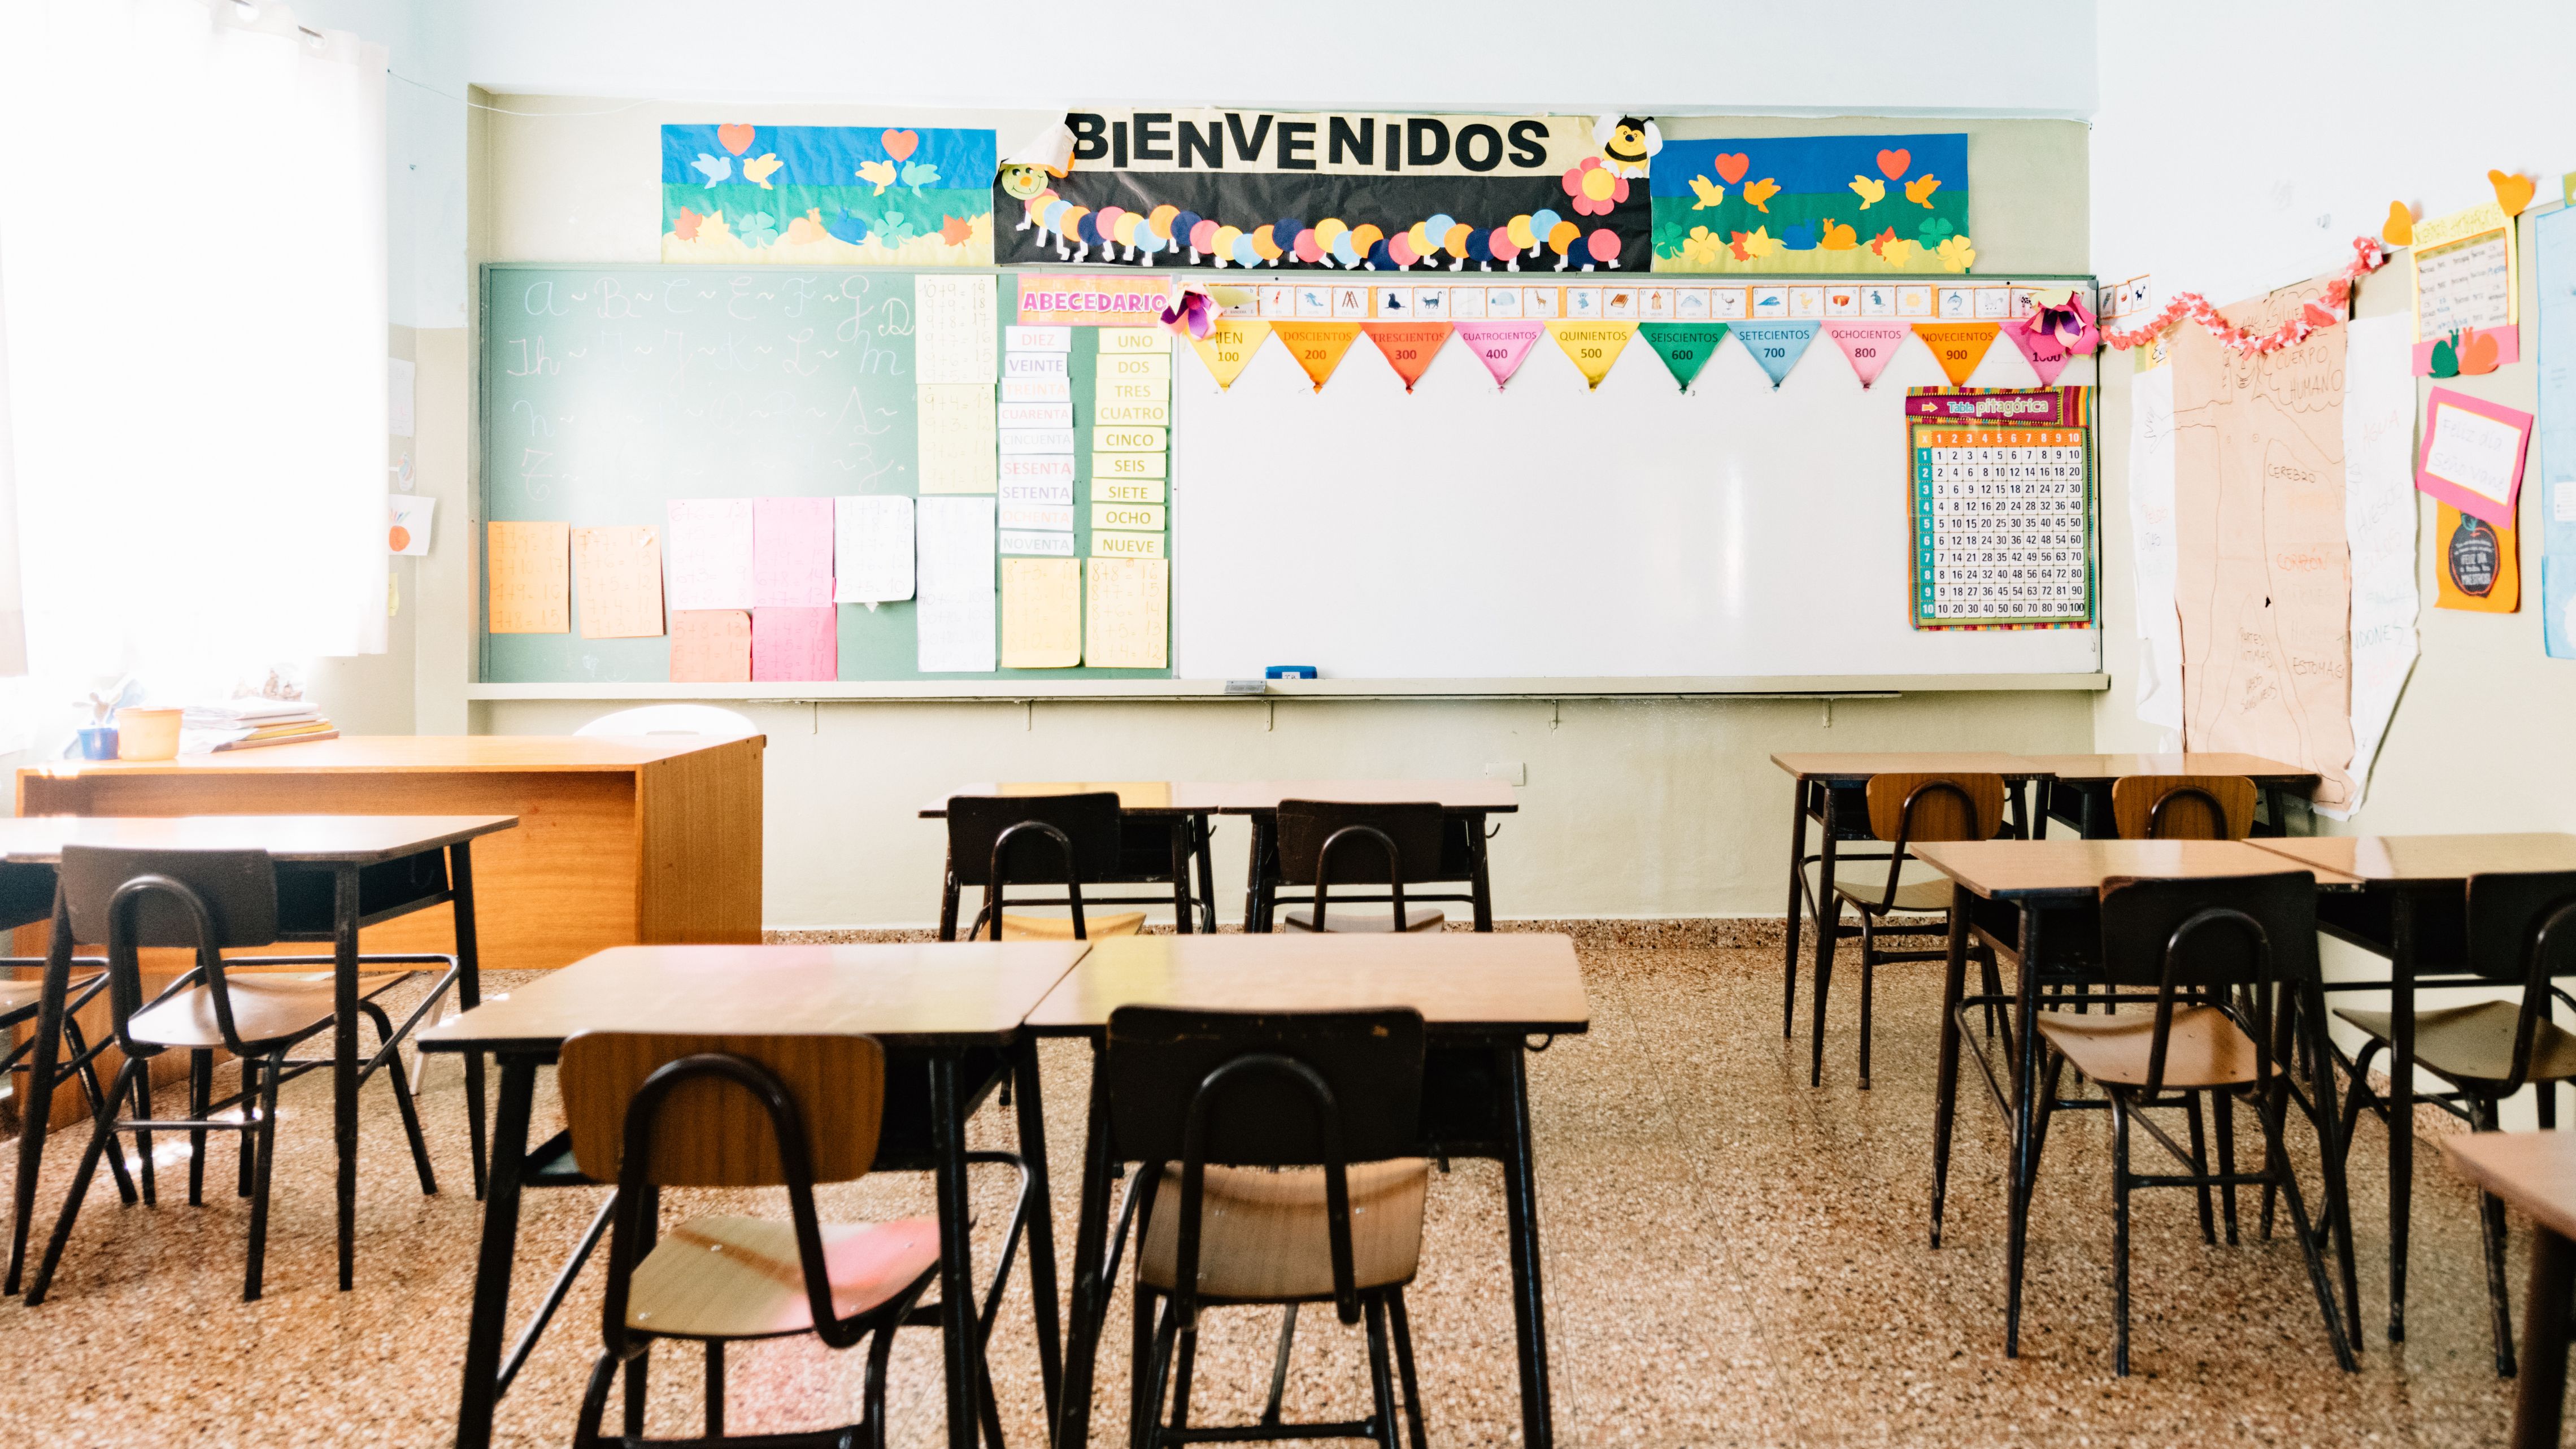 A classroom with a "bienvenidos" sign